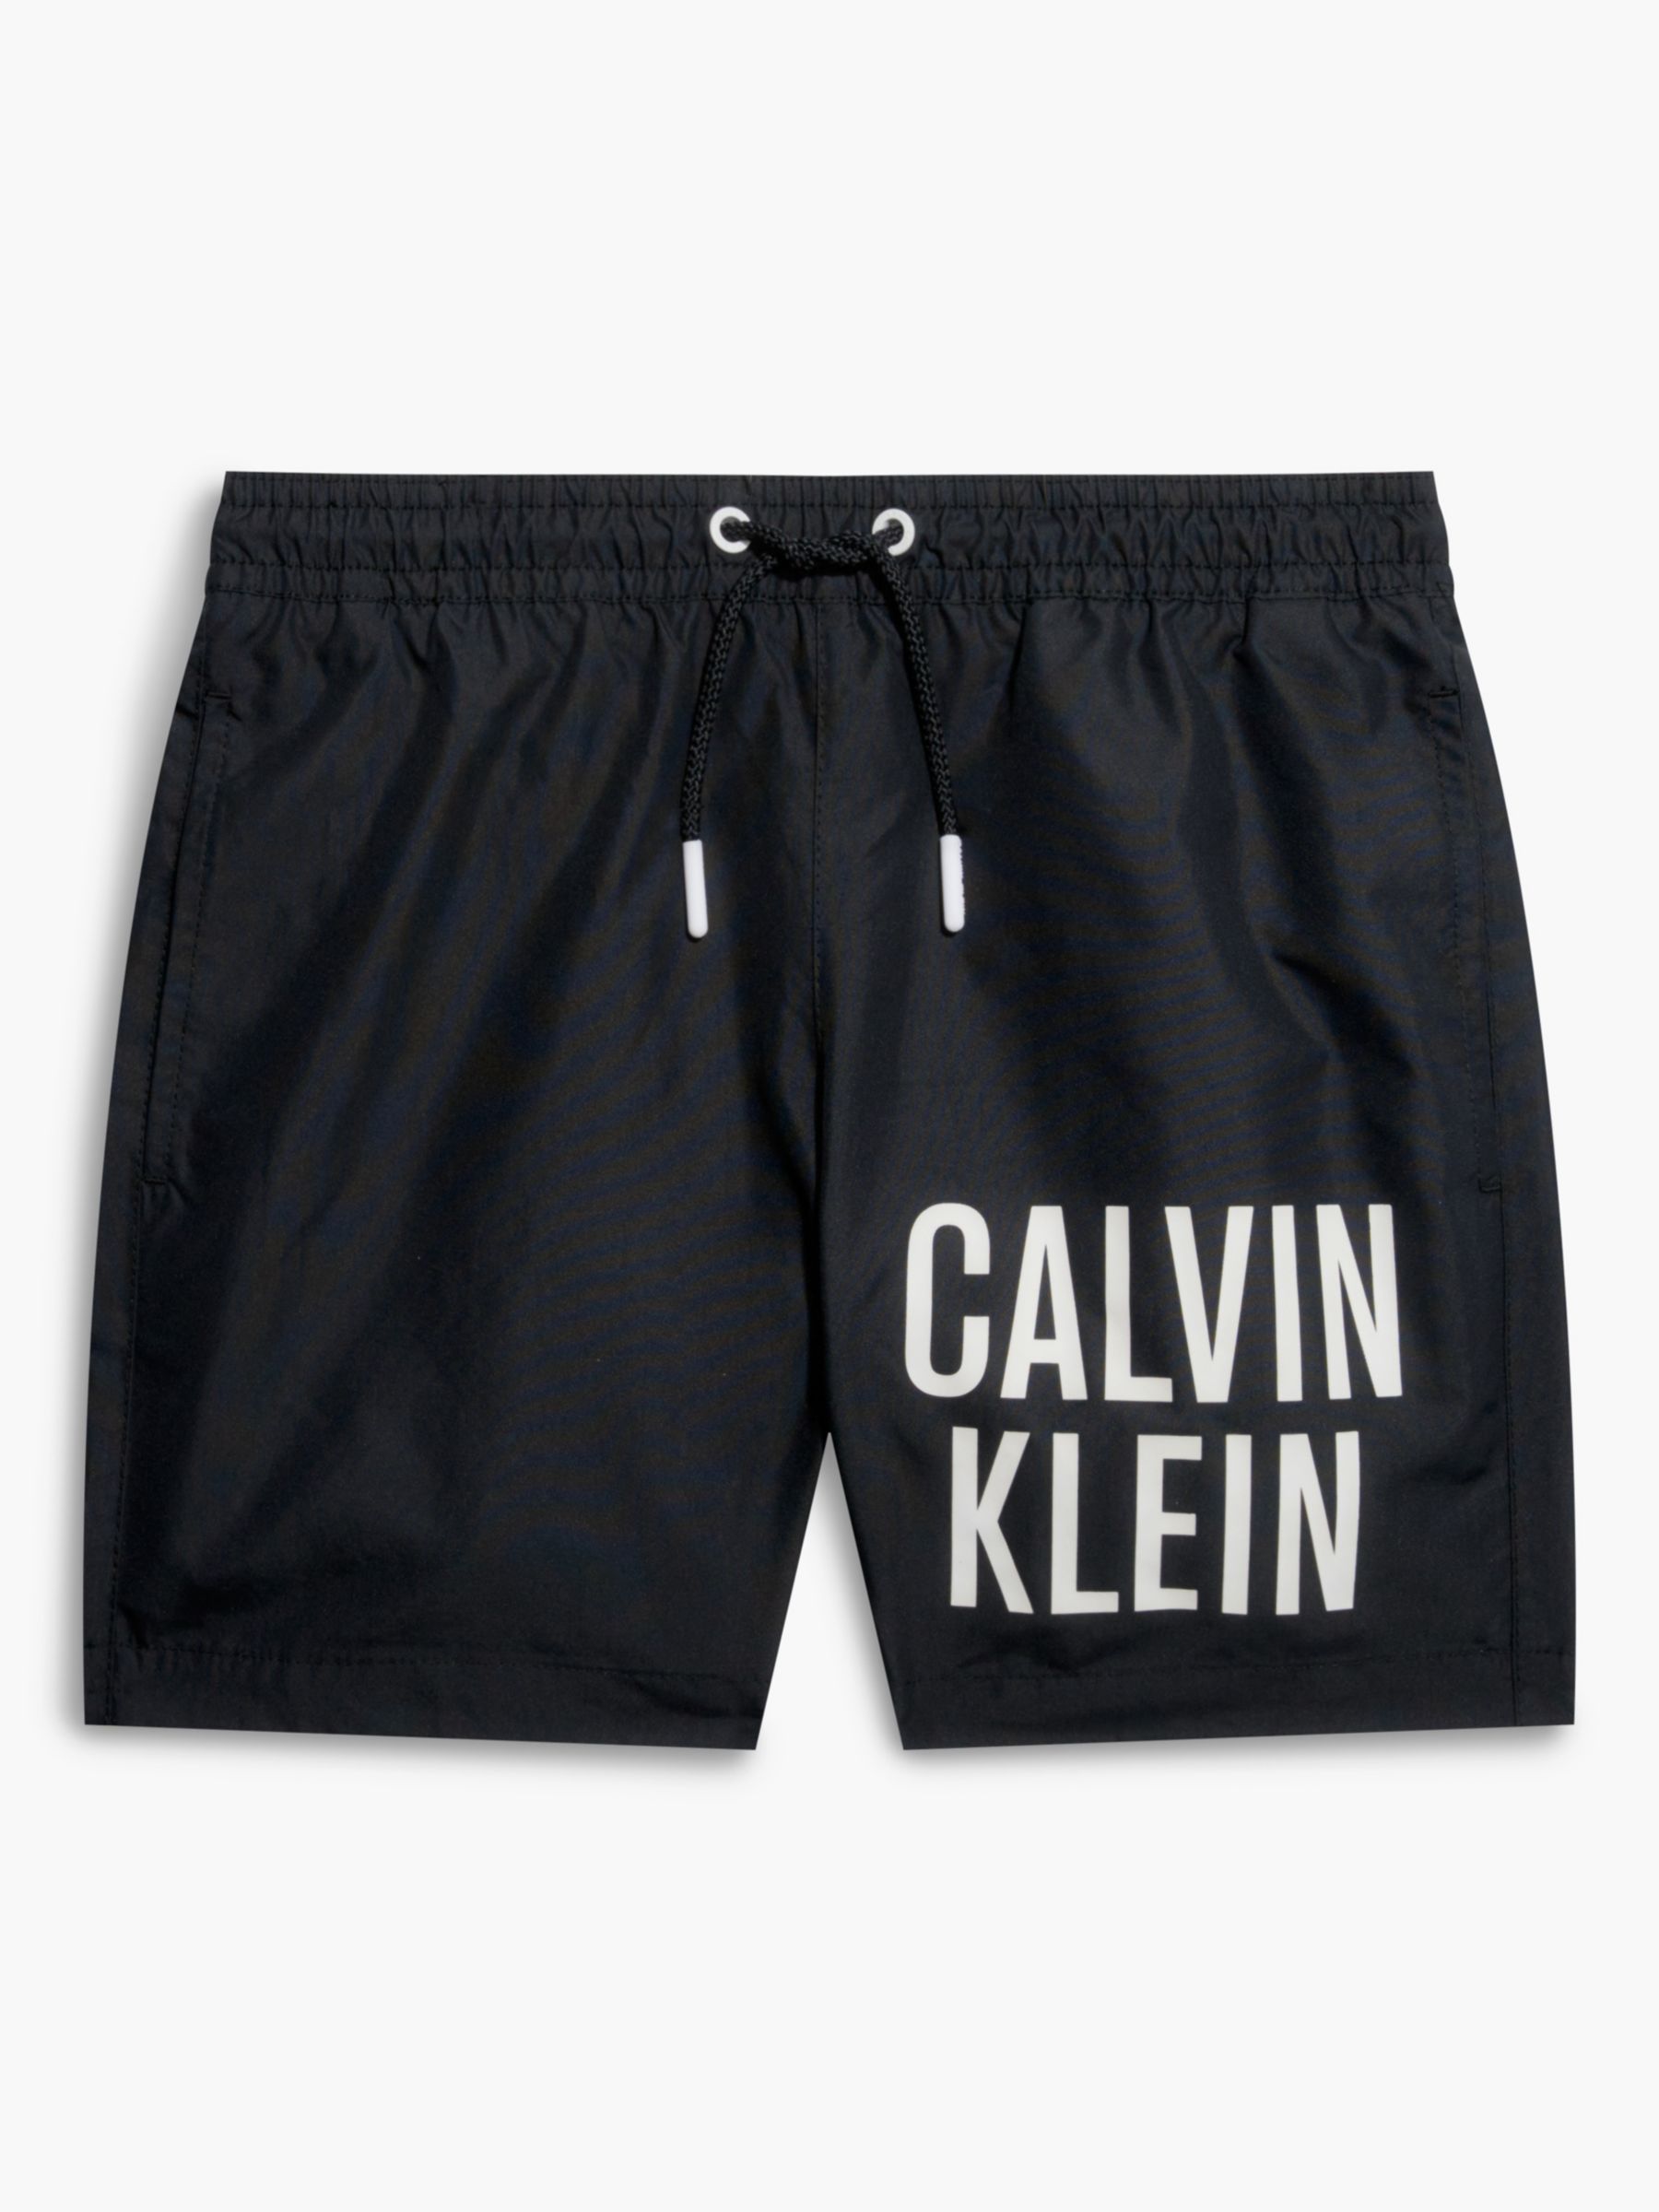 Calvin Klein Kids' Intense Power Swim Shorts, Black